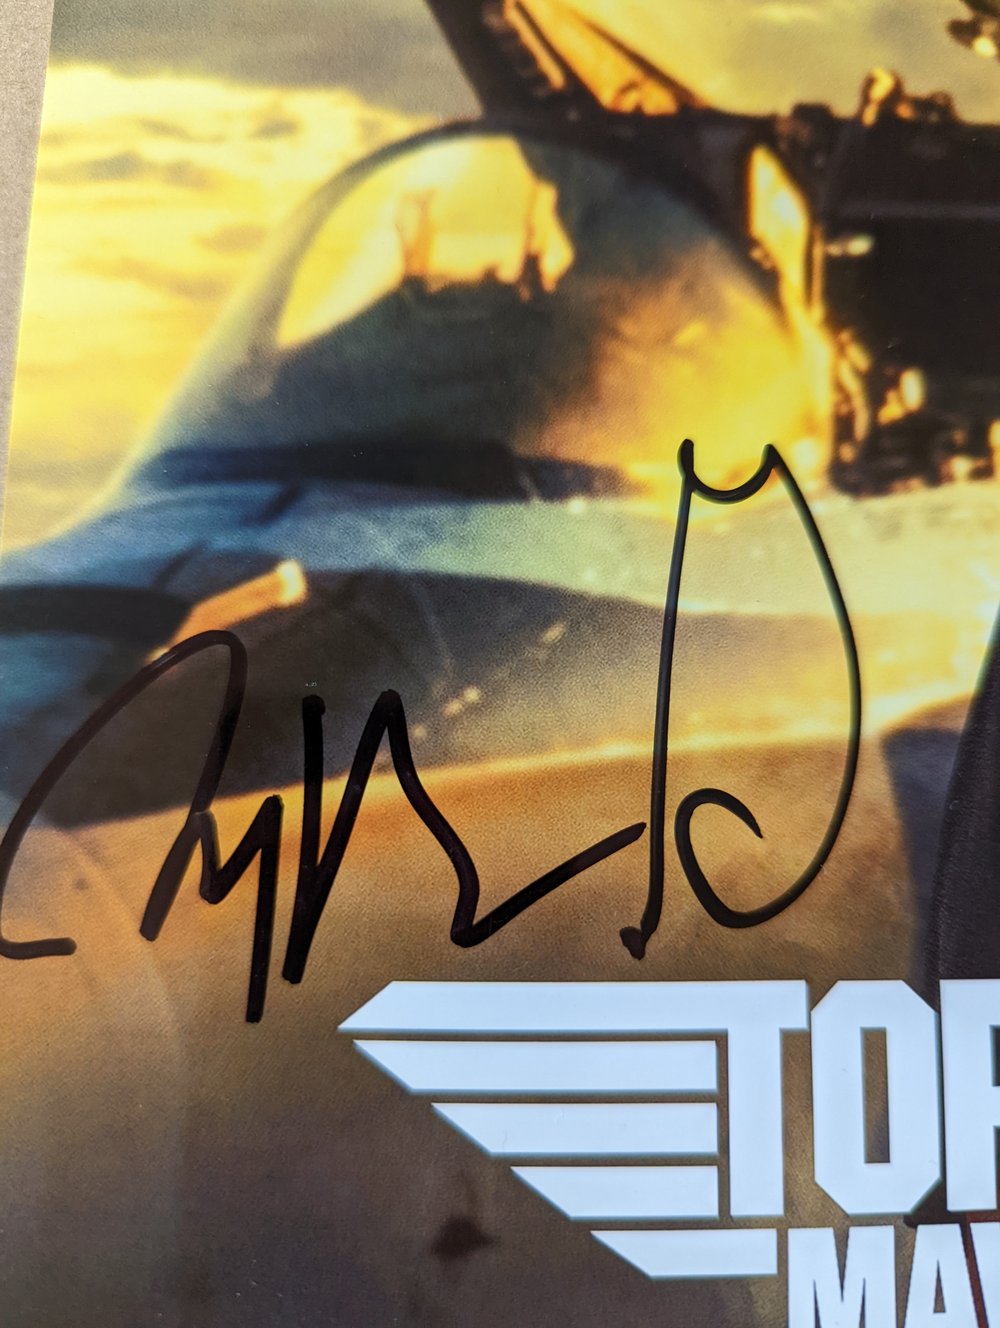 Top Gun Maverick Cast (5) Signed 12x8